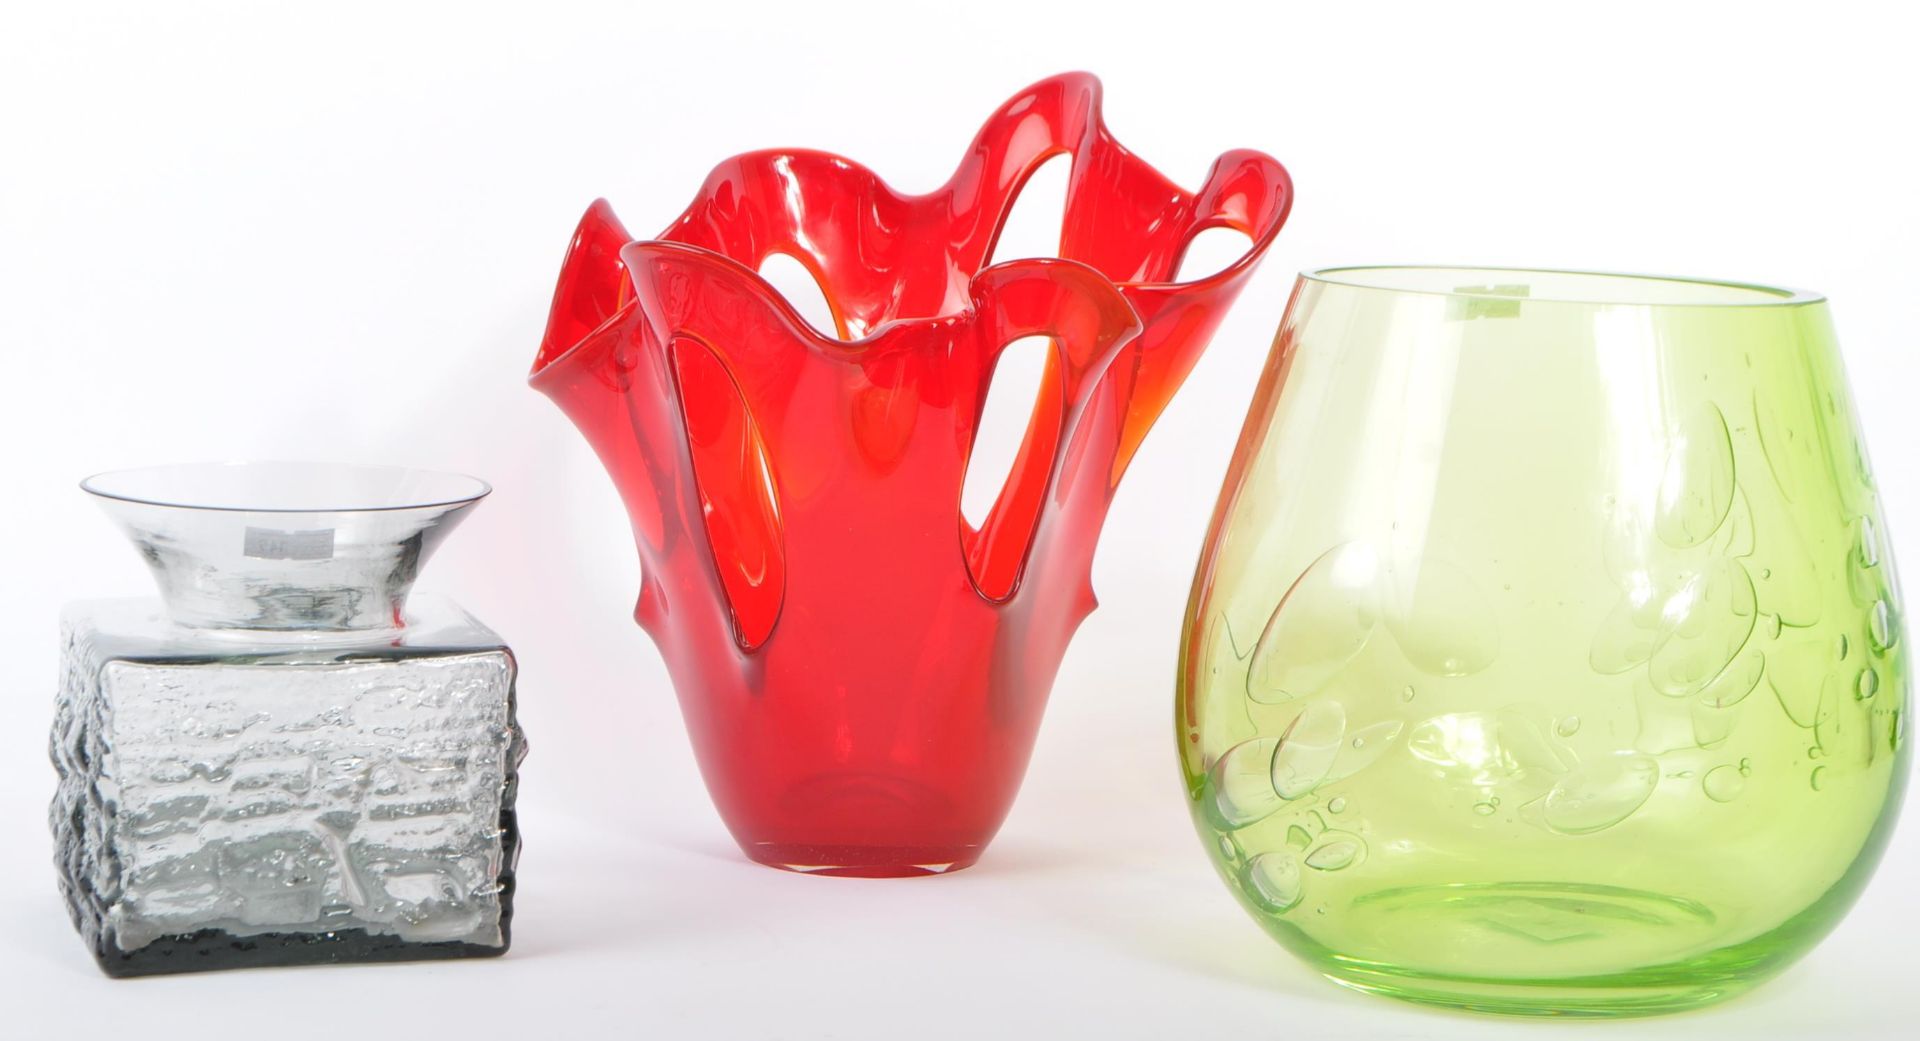 THREE VINTAGE 20TH CENTURY STUDIO ART GLASS EXAMPLES